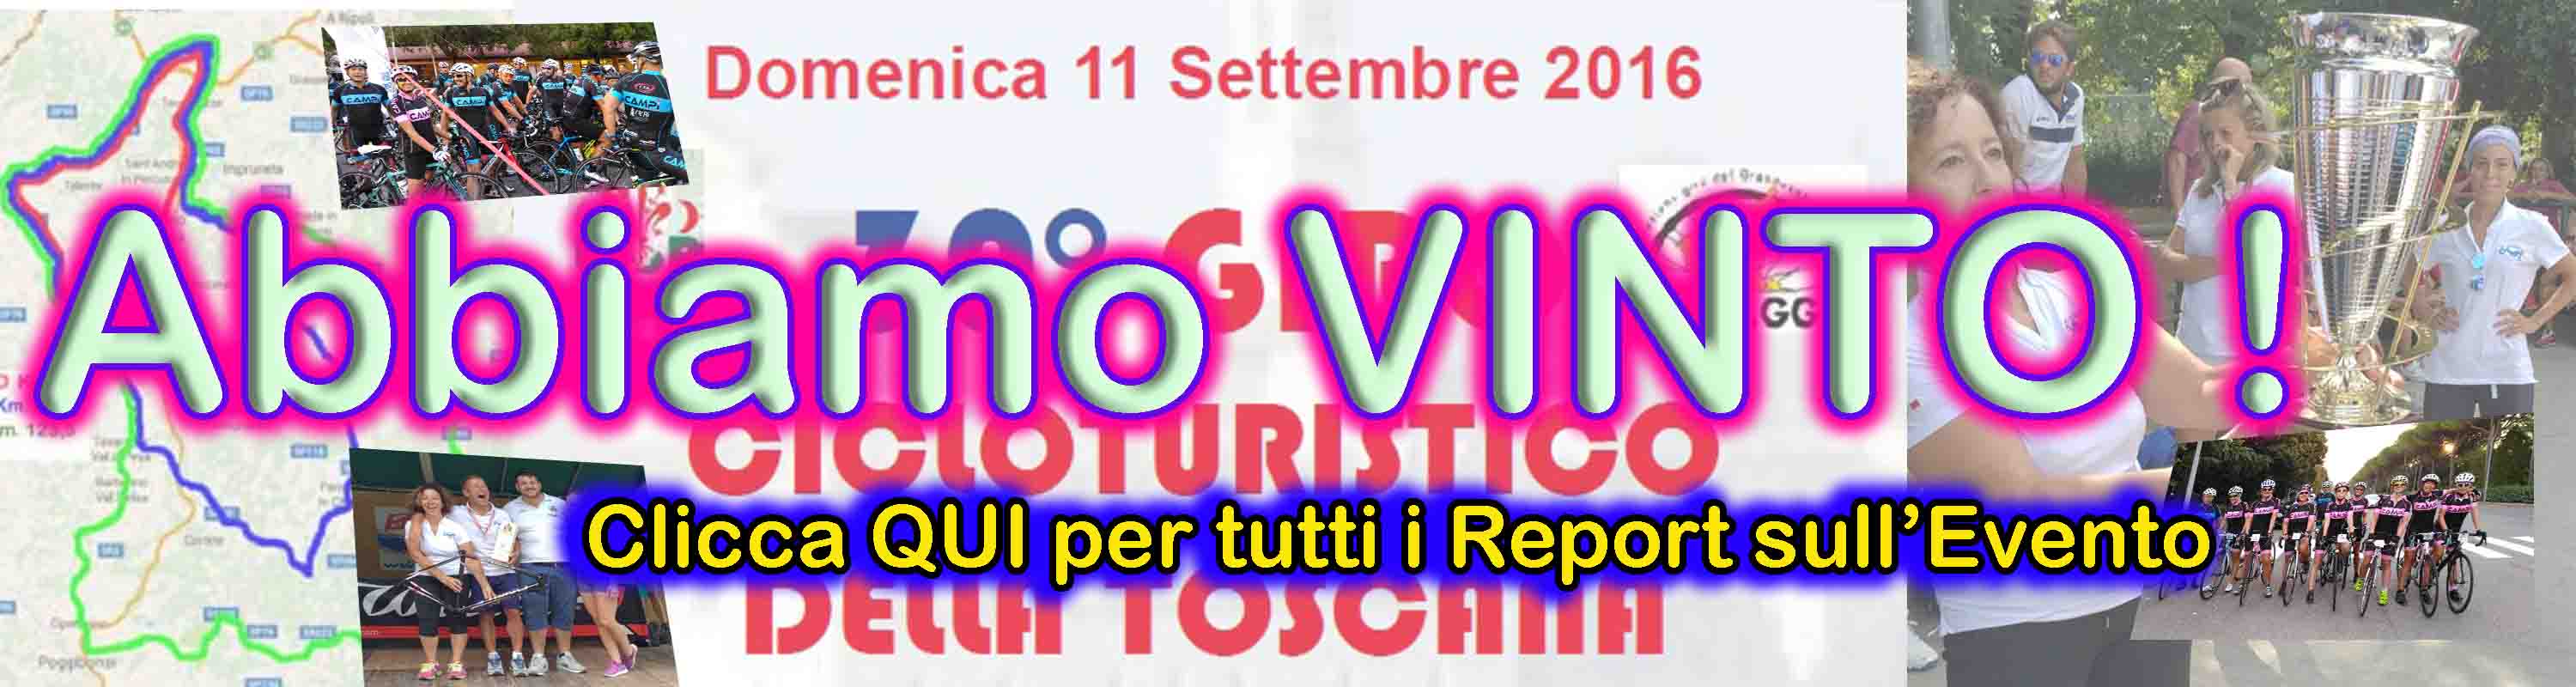 Banner Vittoria_Giro_della_Toscana 2016